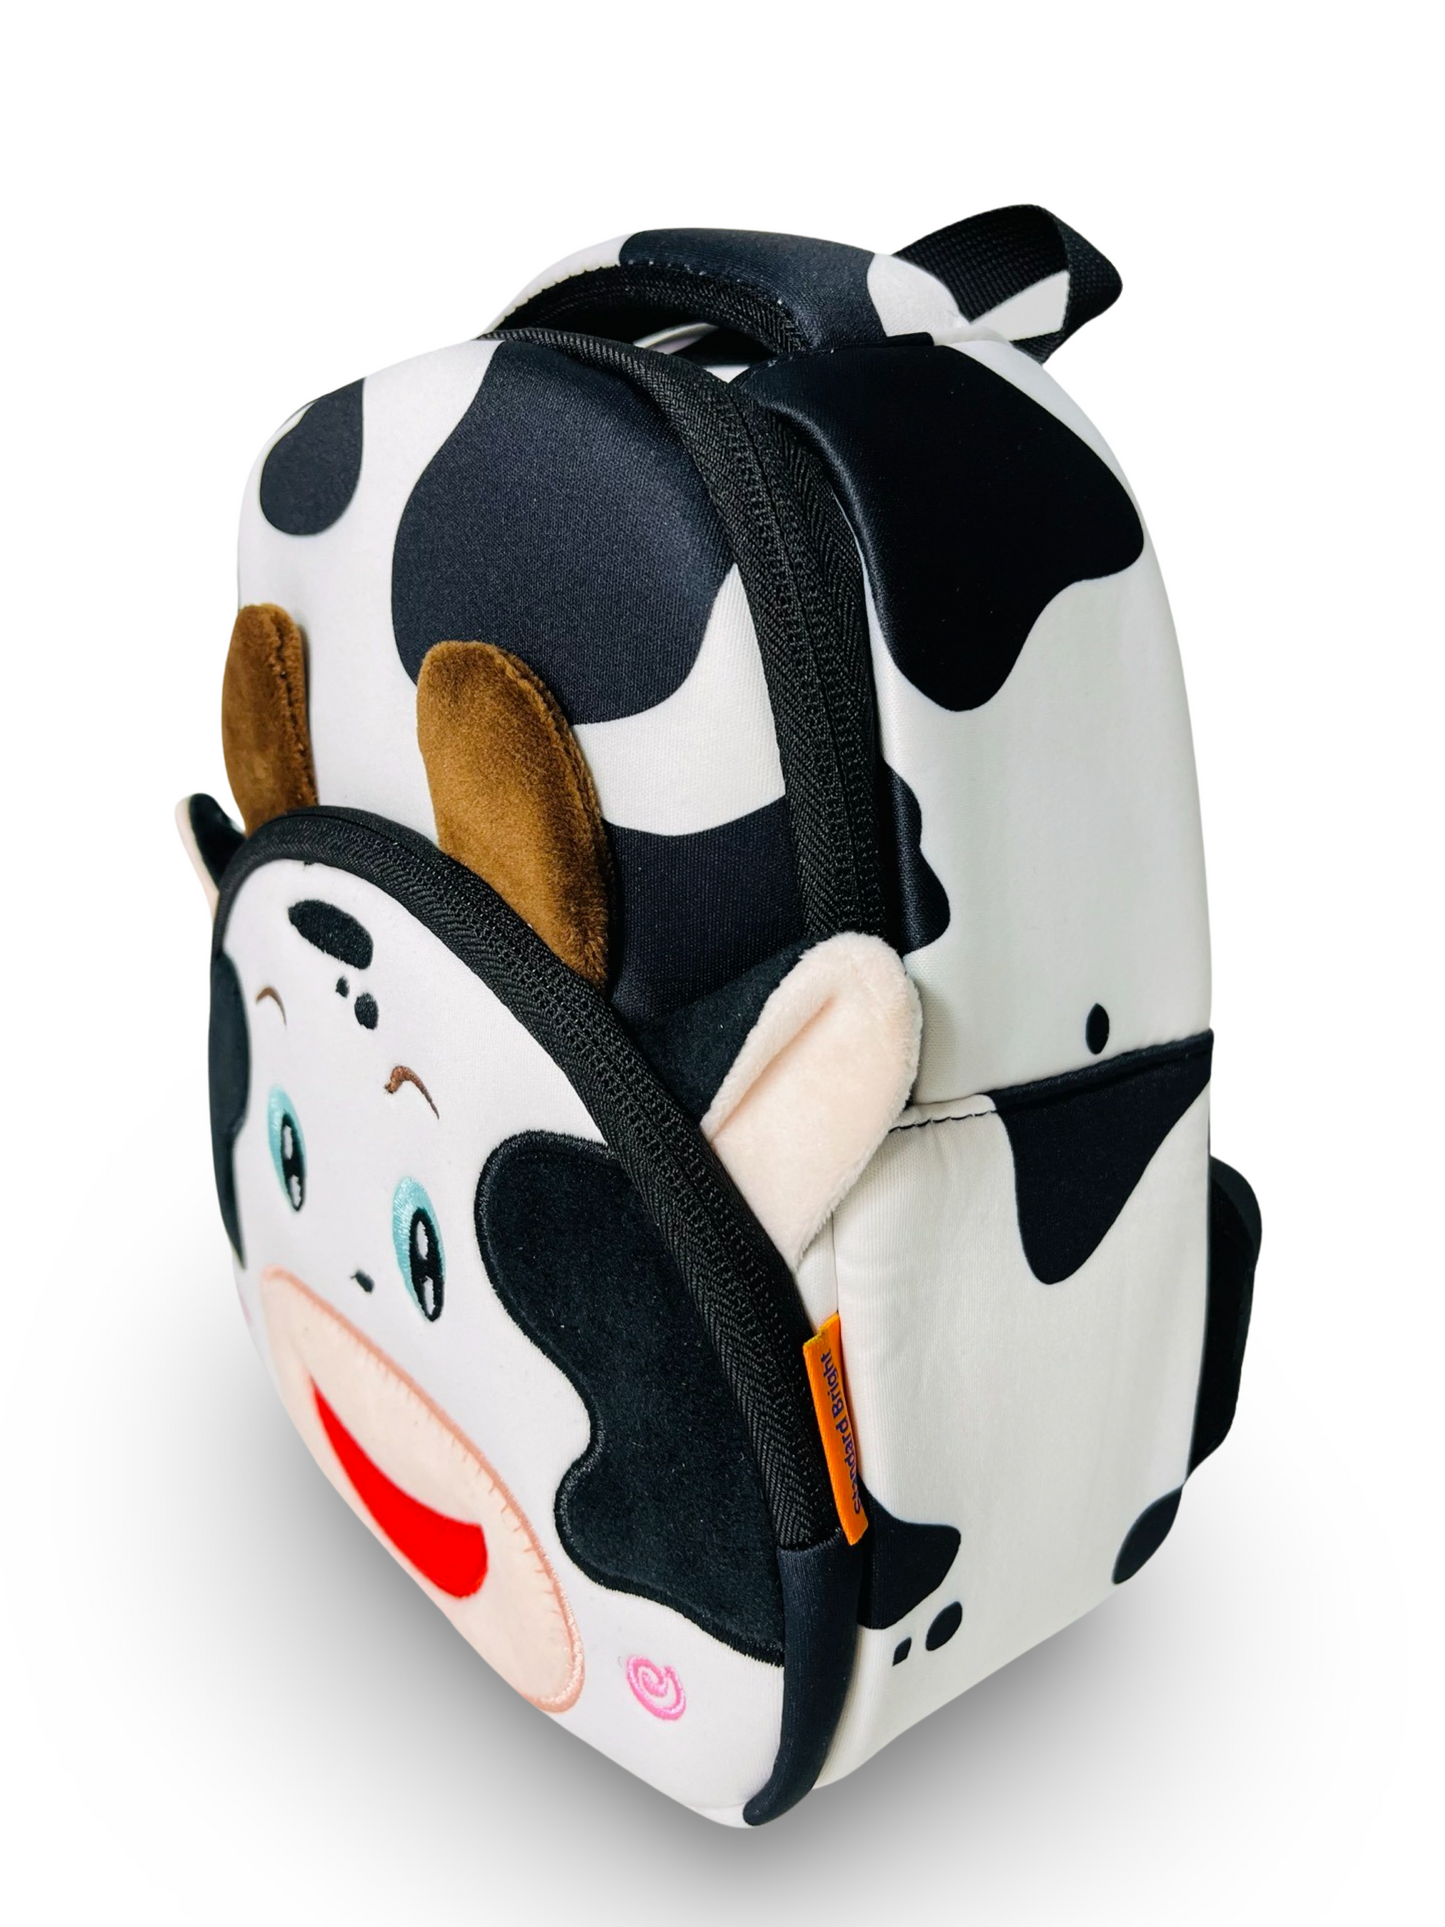 3D Cow Backpack for Kindergarten Kids